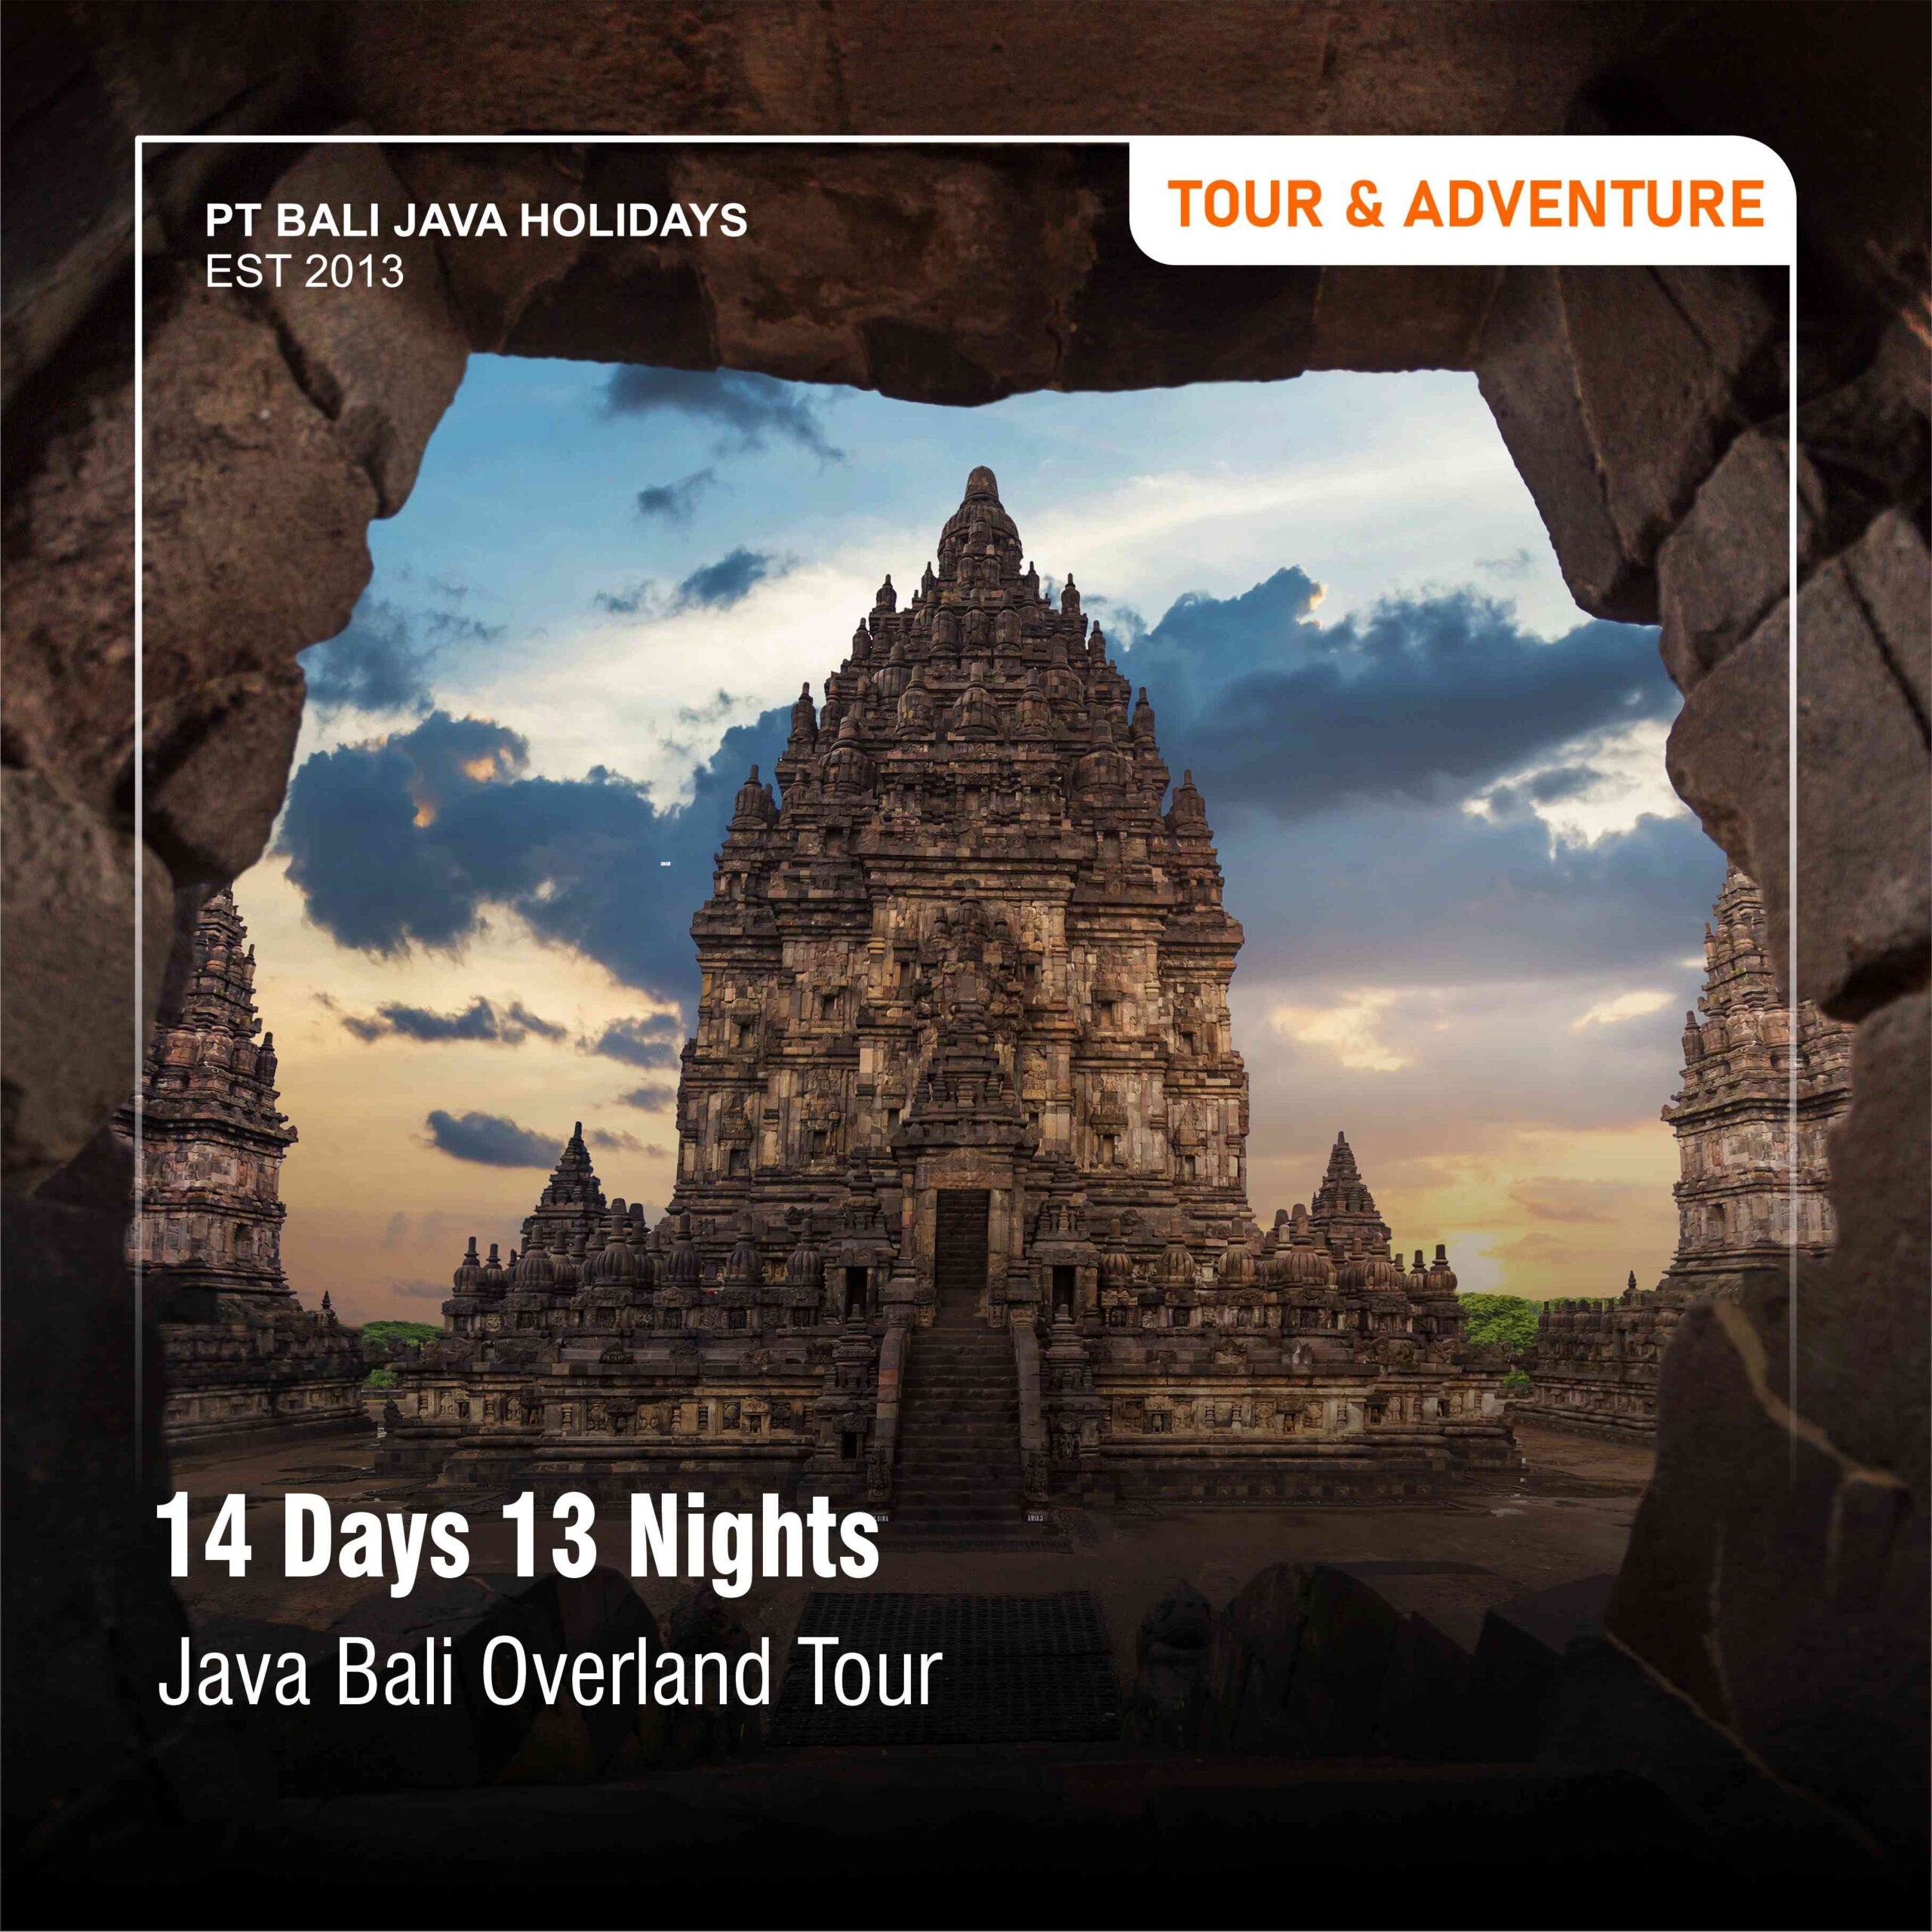 Java Bali Overland Tour 14 Days 13 Nights